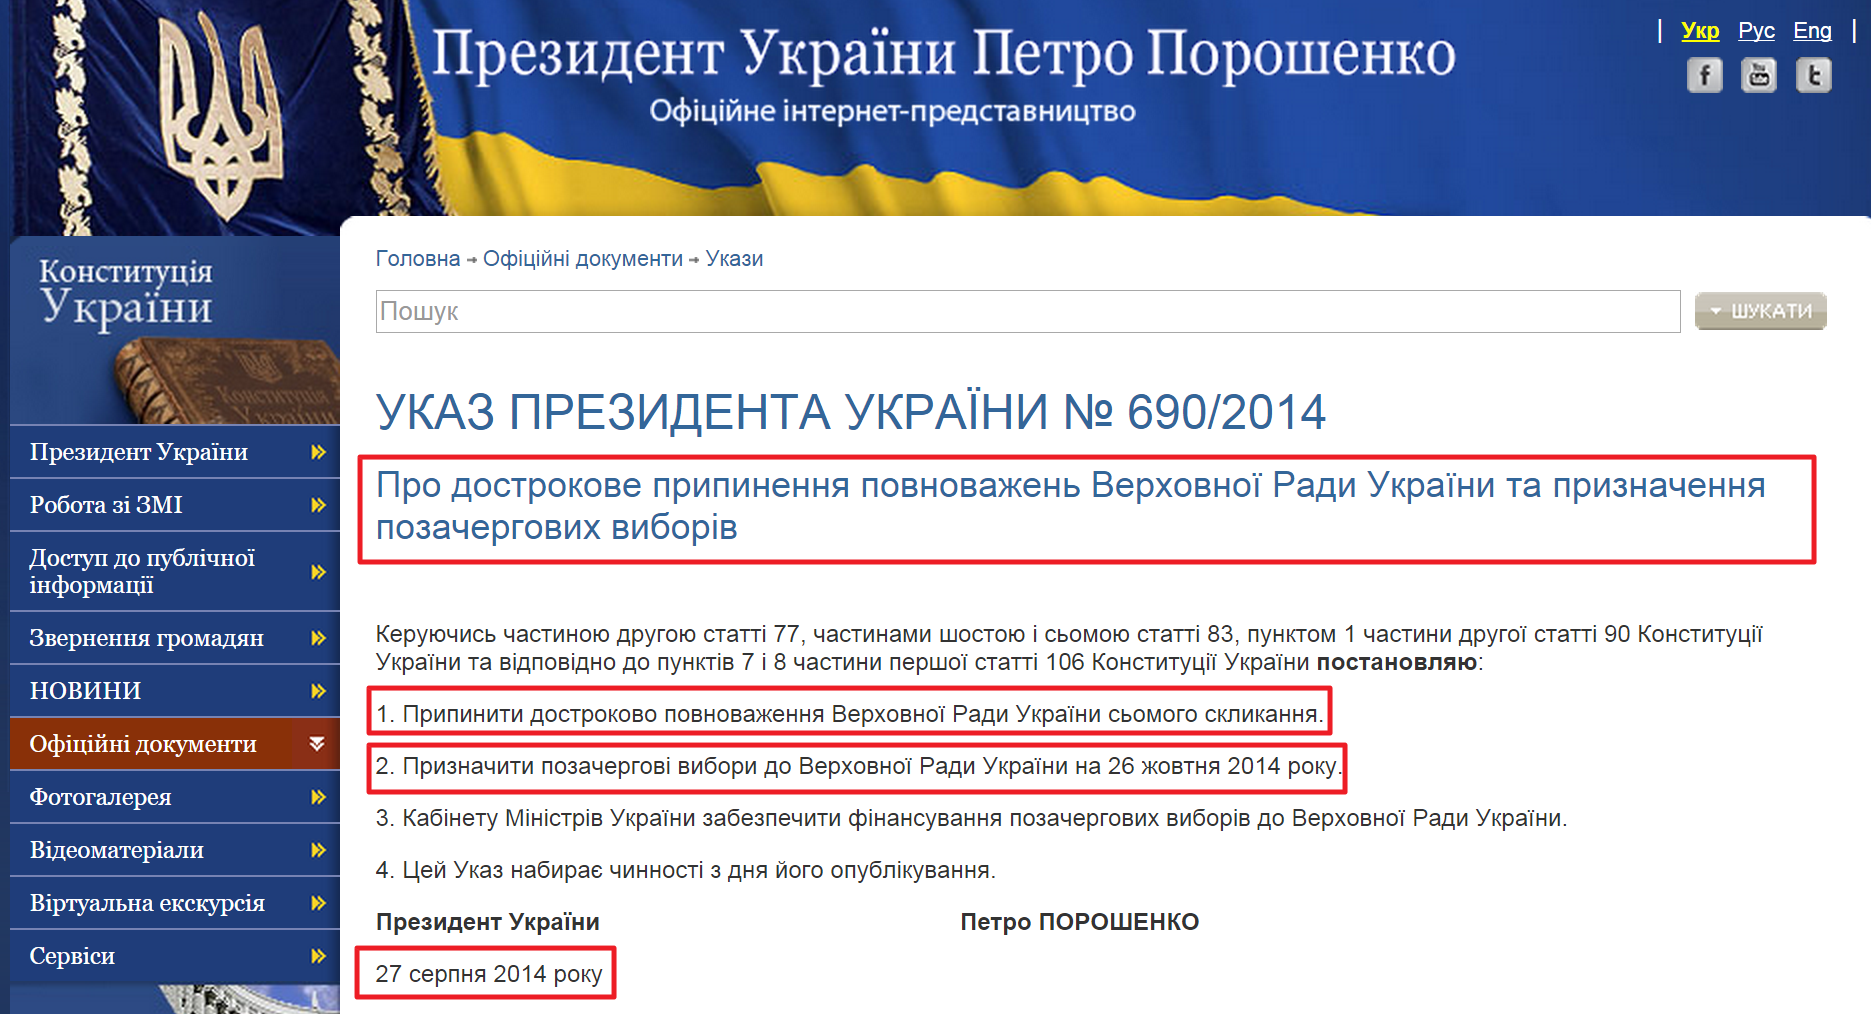 http://www.president.gov.ua/documents/6902014-17590